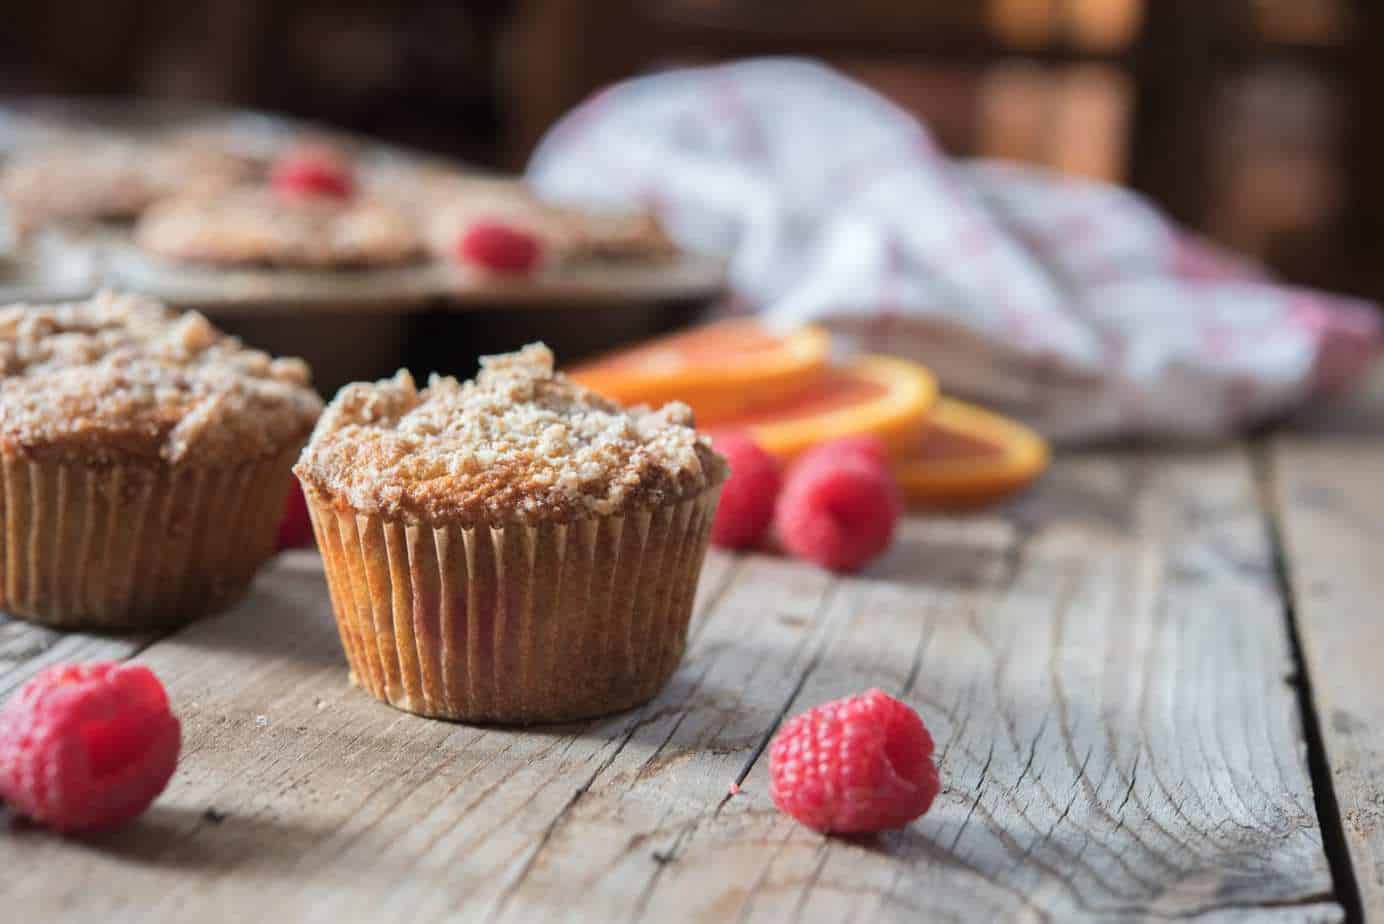 Paleo and gluten-free Orange Raspberry Muffins by Thriving On Paleo